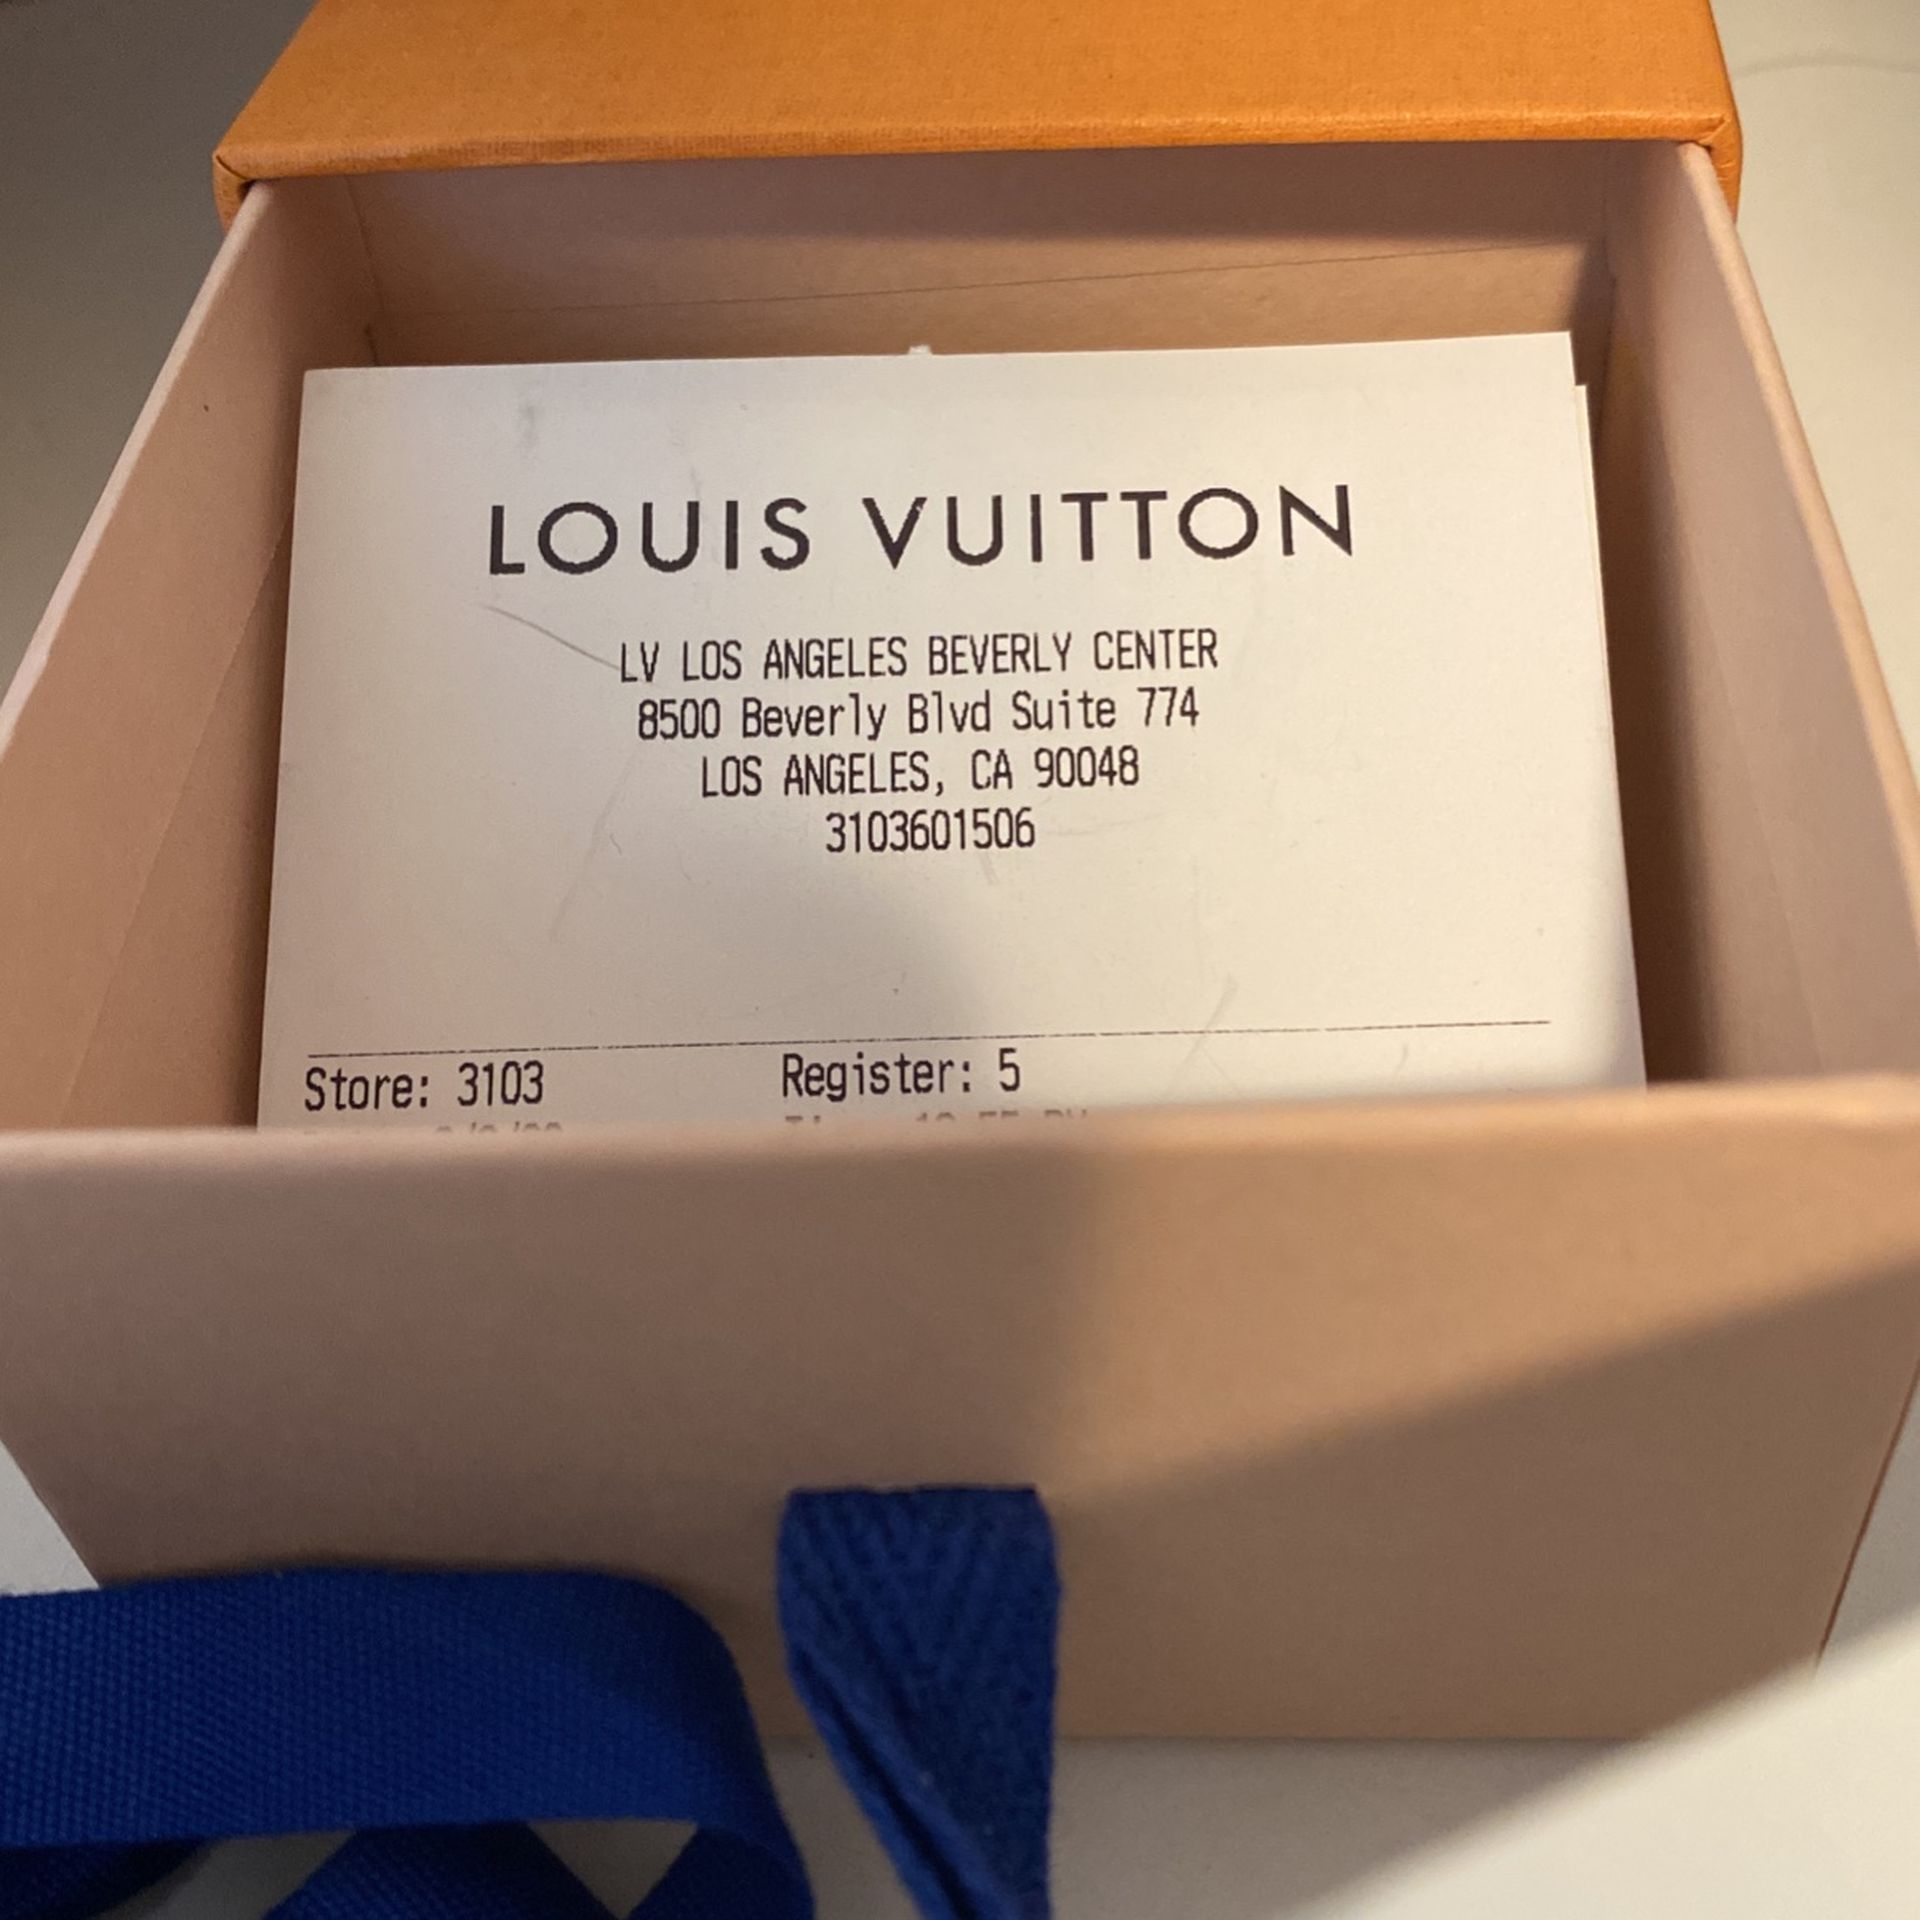 LV Hoop Earrings – lex luxe supply